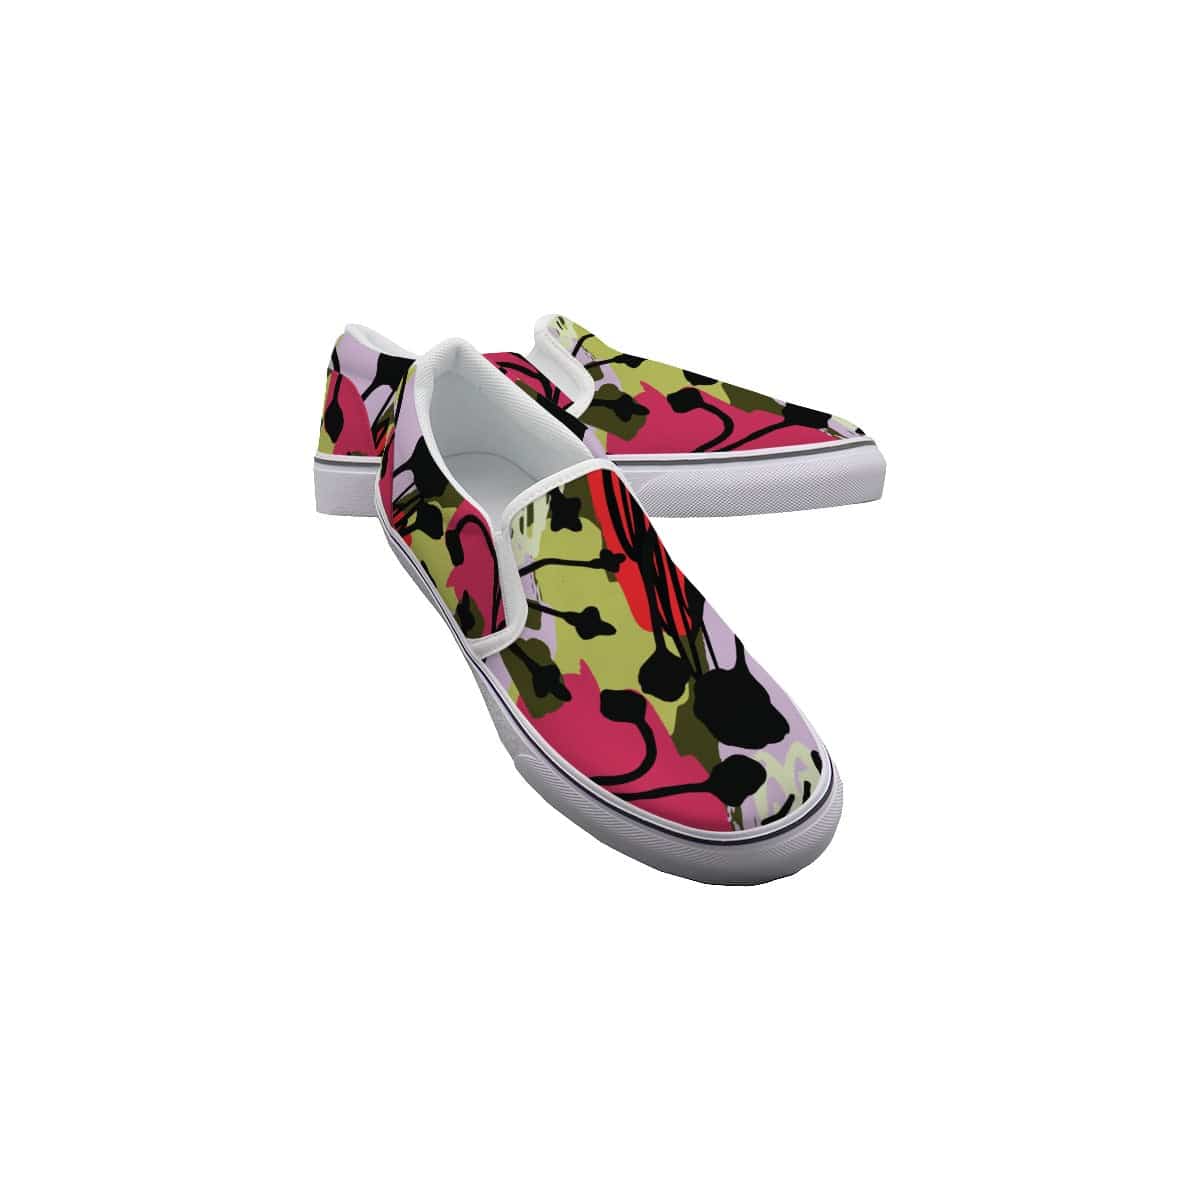 Yoycol White / US6(EUR36) Colorwave Cruisers - Women's Slip On Sneakers